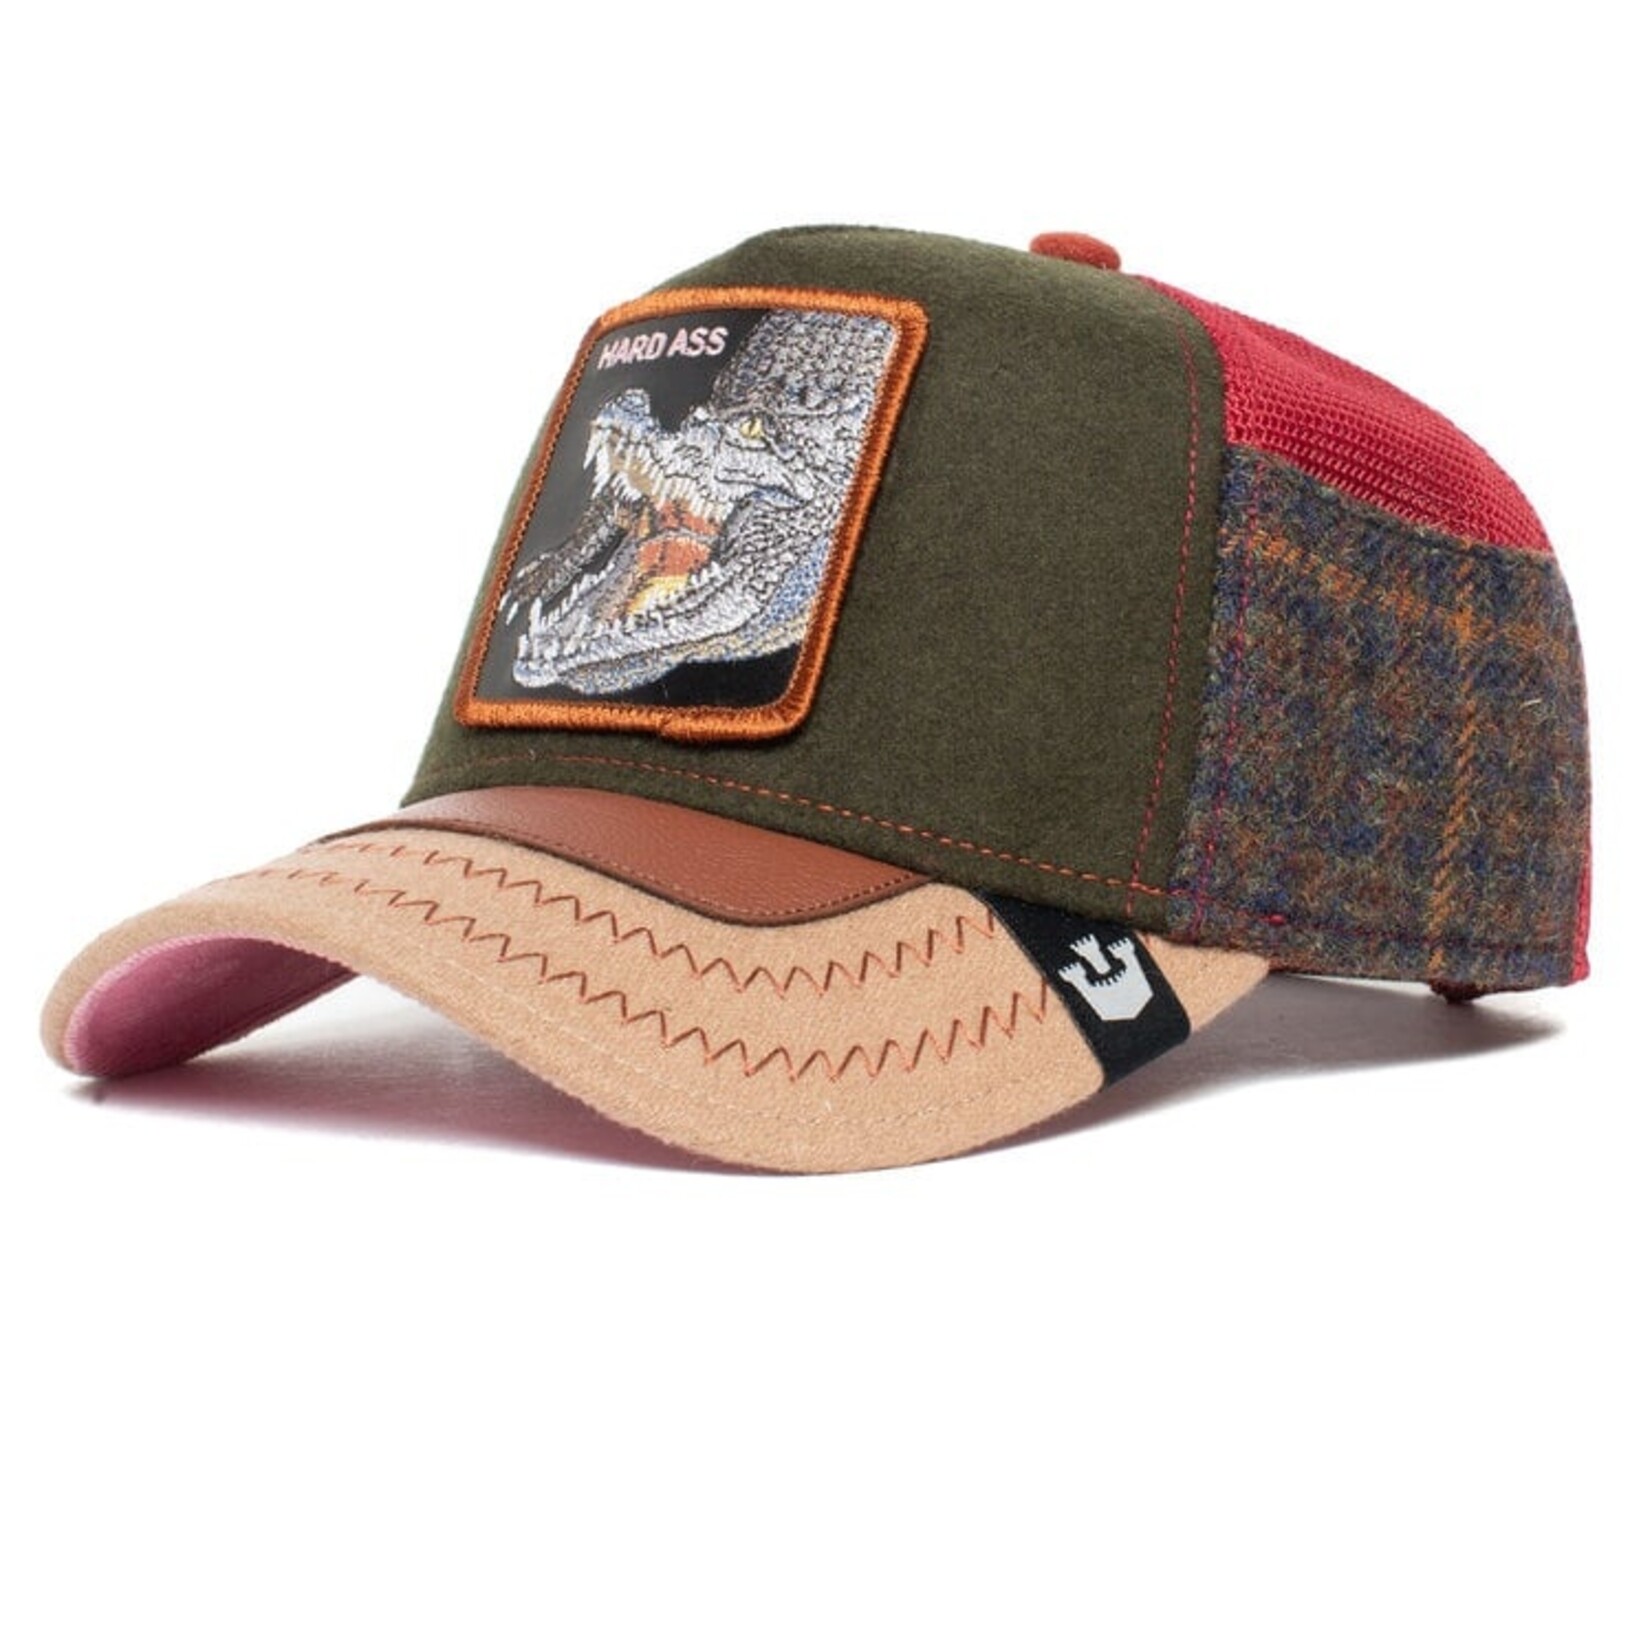 Goorin Bros. Hard Ass Olive Trucker Hat